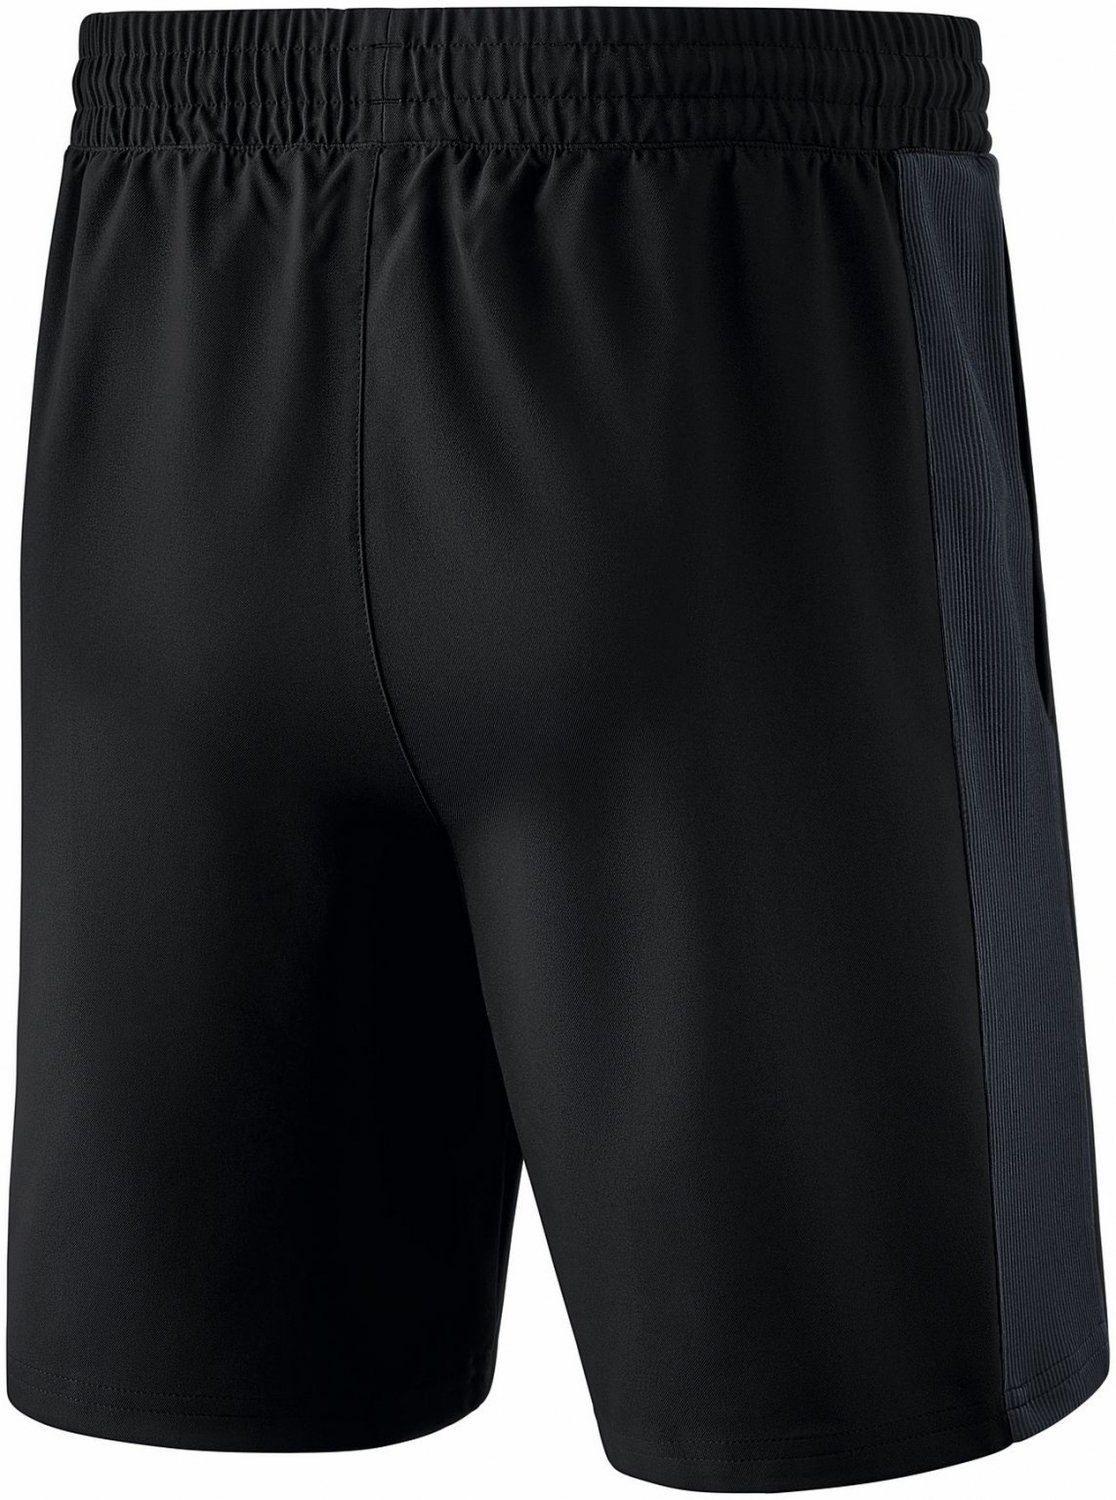 PREMIUM ONE shorts schwarz s Laufshorts 2.0 black with inner Erima